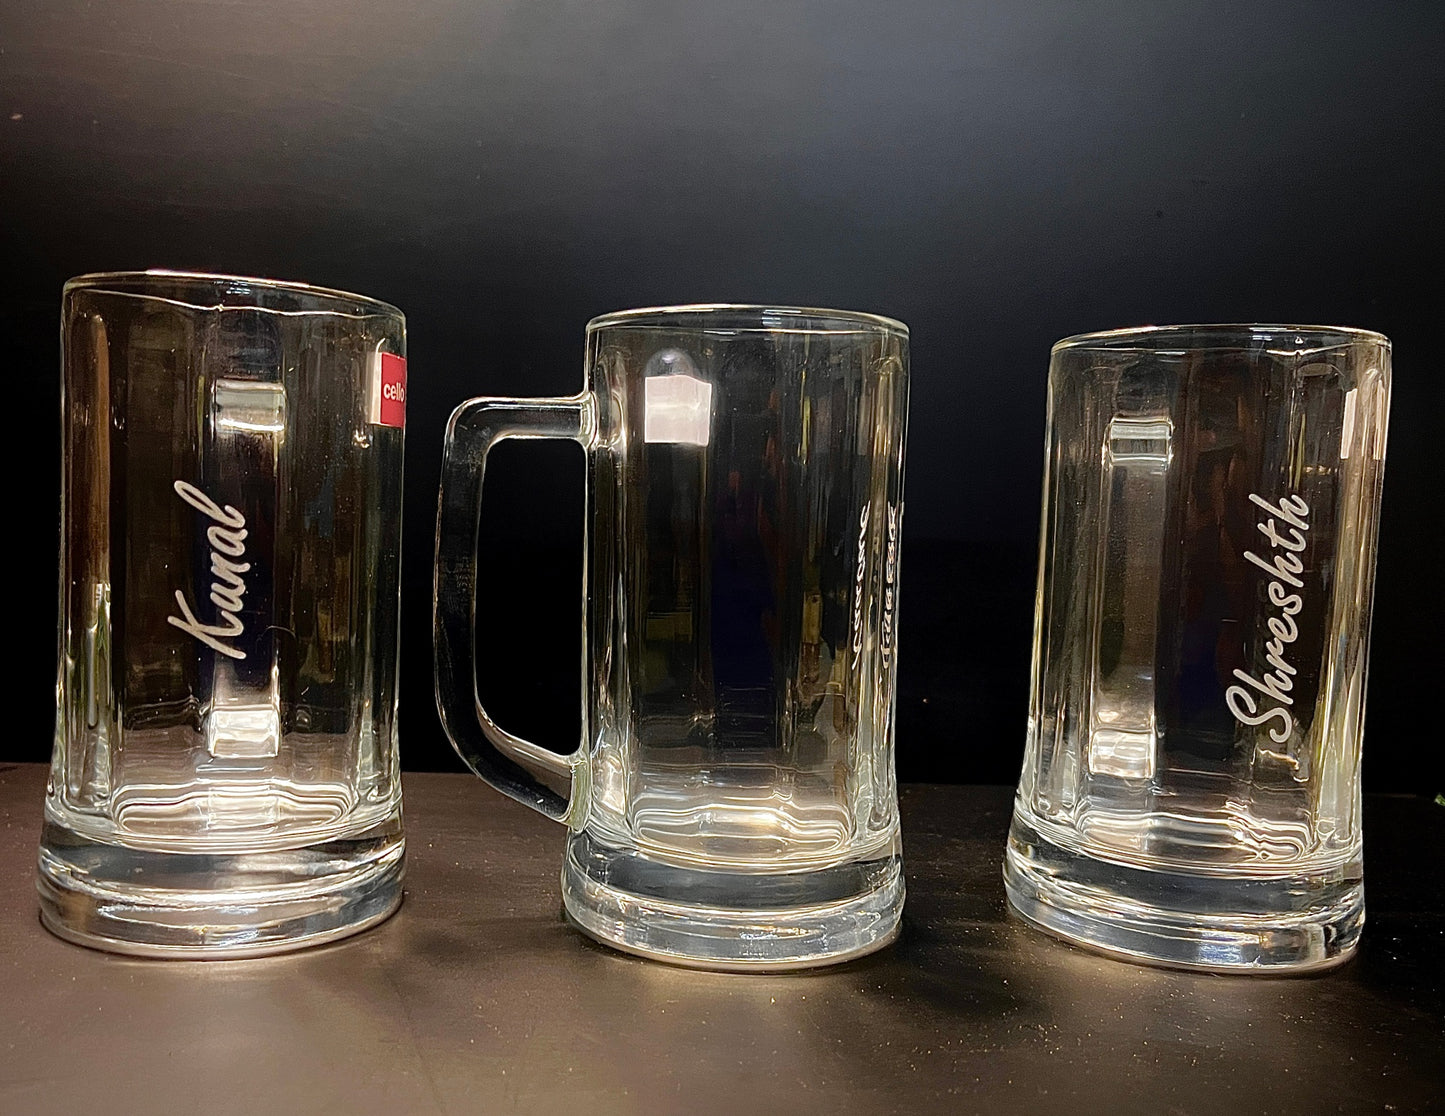 Best2U-Personalized Beer Mug (Set of 2)